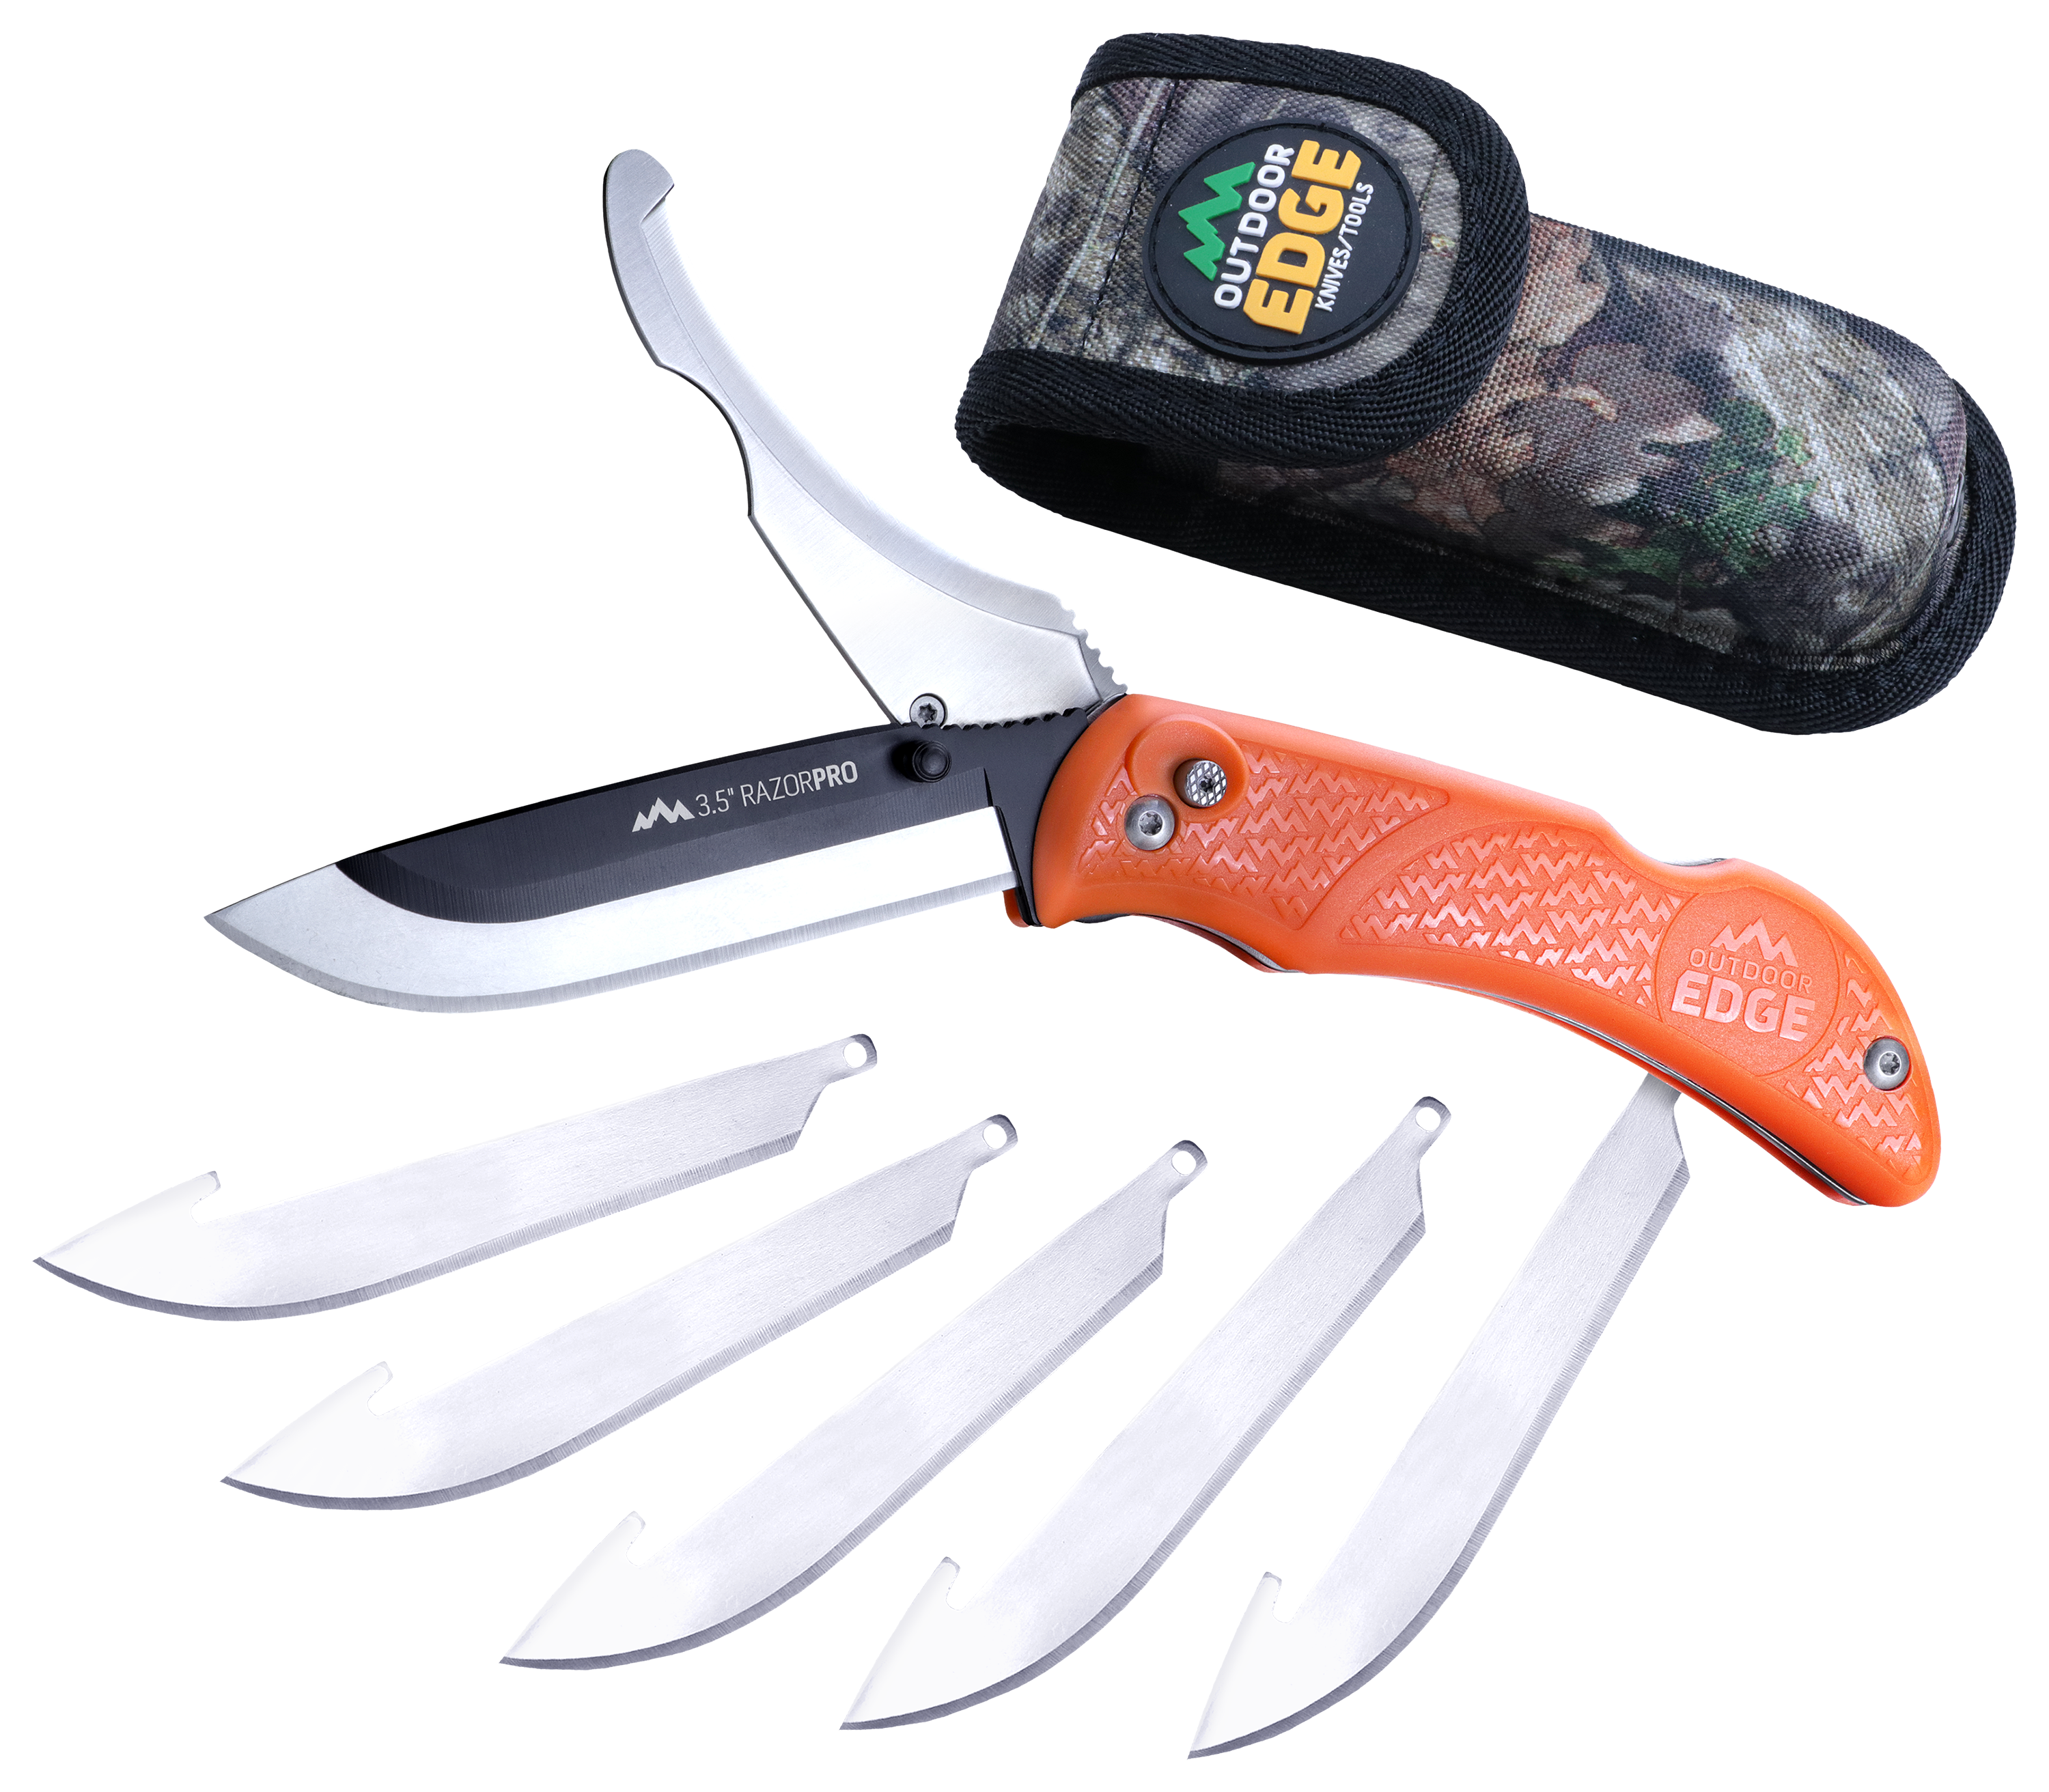 Outdoor Edge RazorPro Replaceable Double-Blade Folding Knife